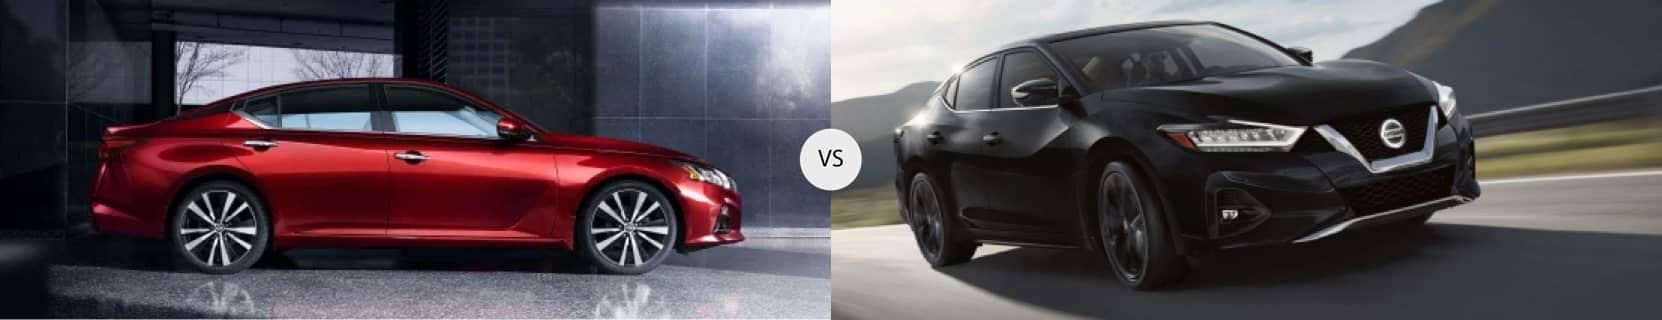 2020 Nissan Altima vs 2020 Nissan Maxima